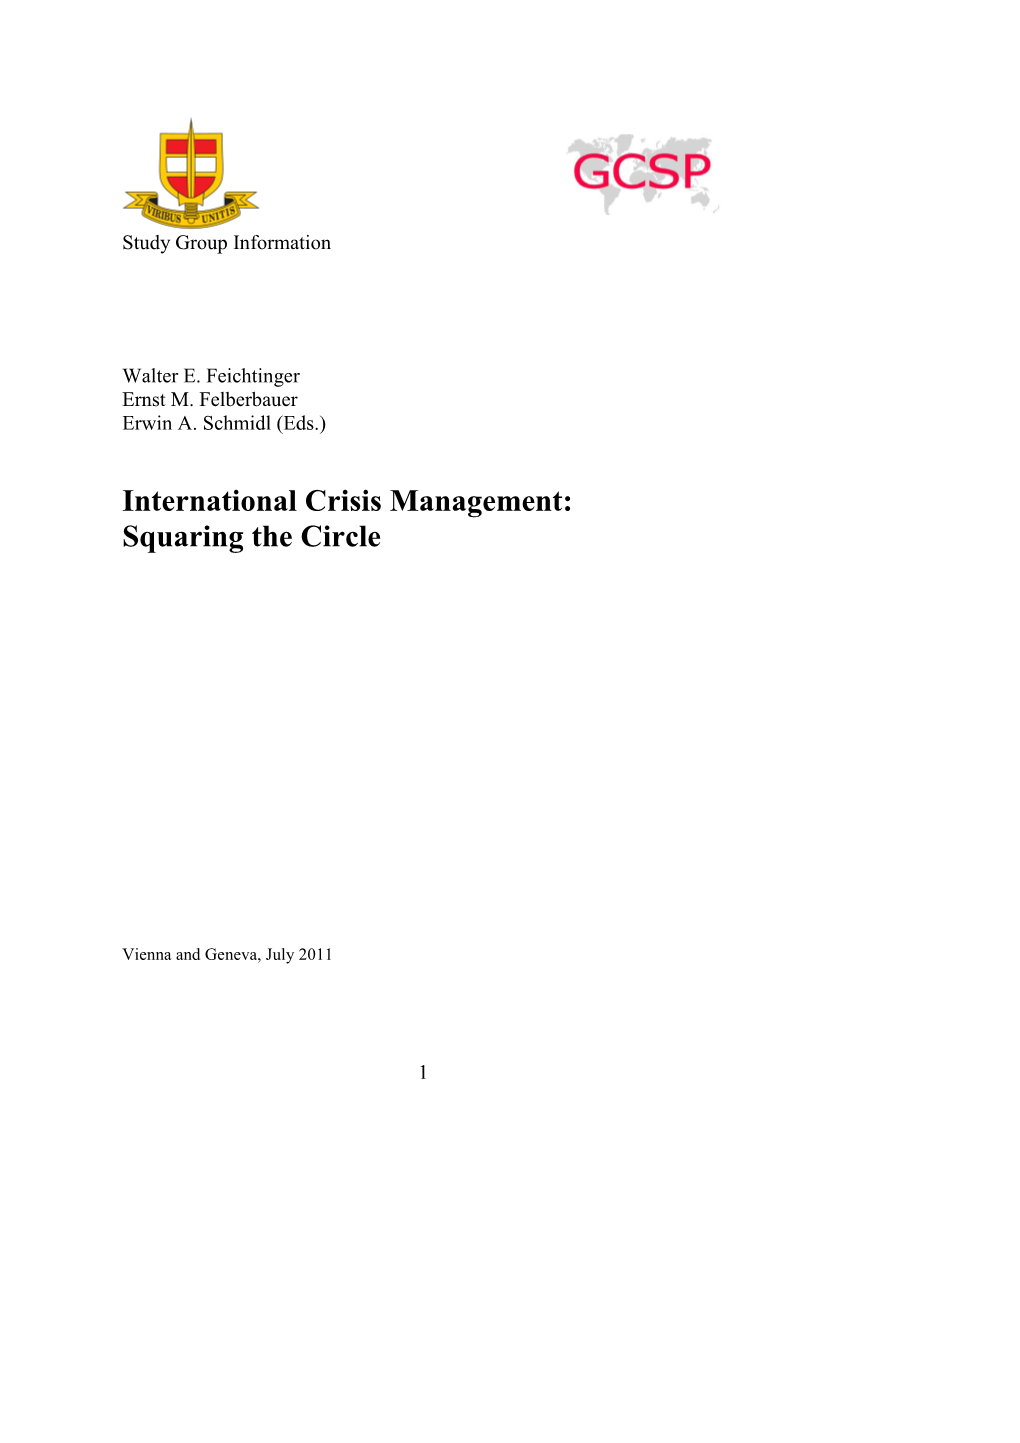 International Crisis Management: Squaring the Circle